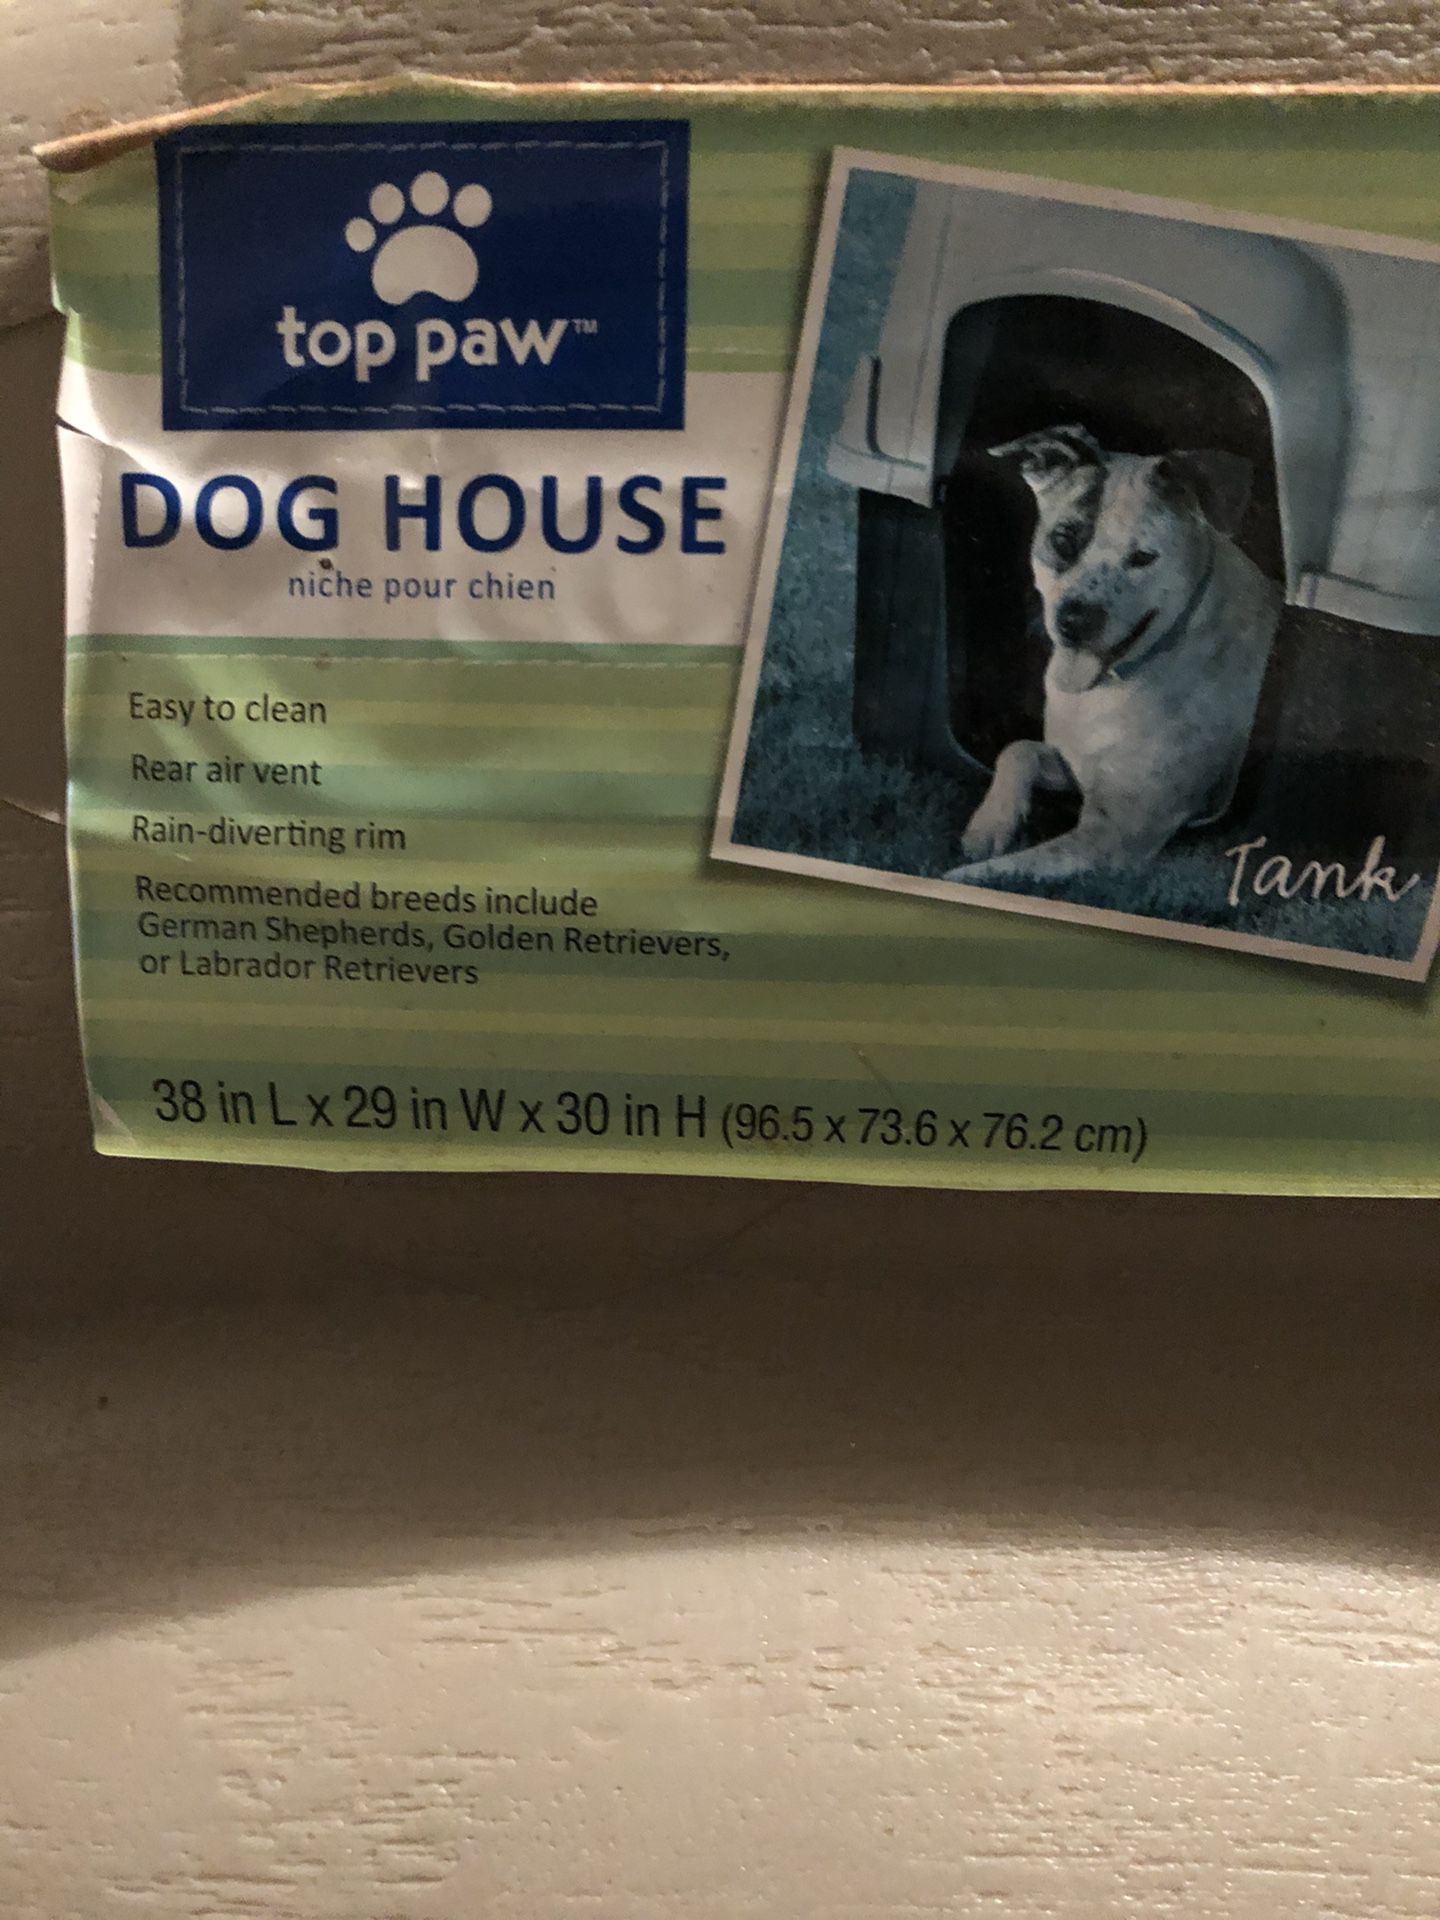 Top paw dog house